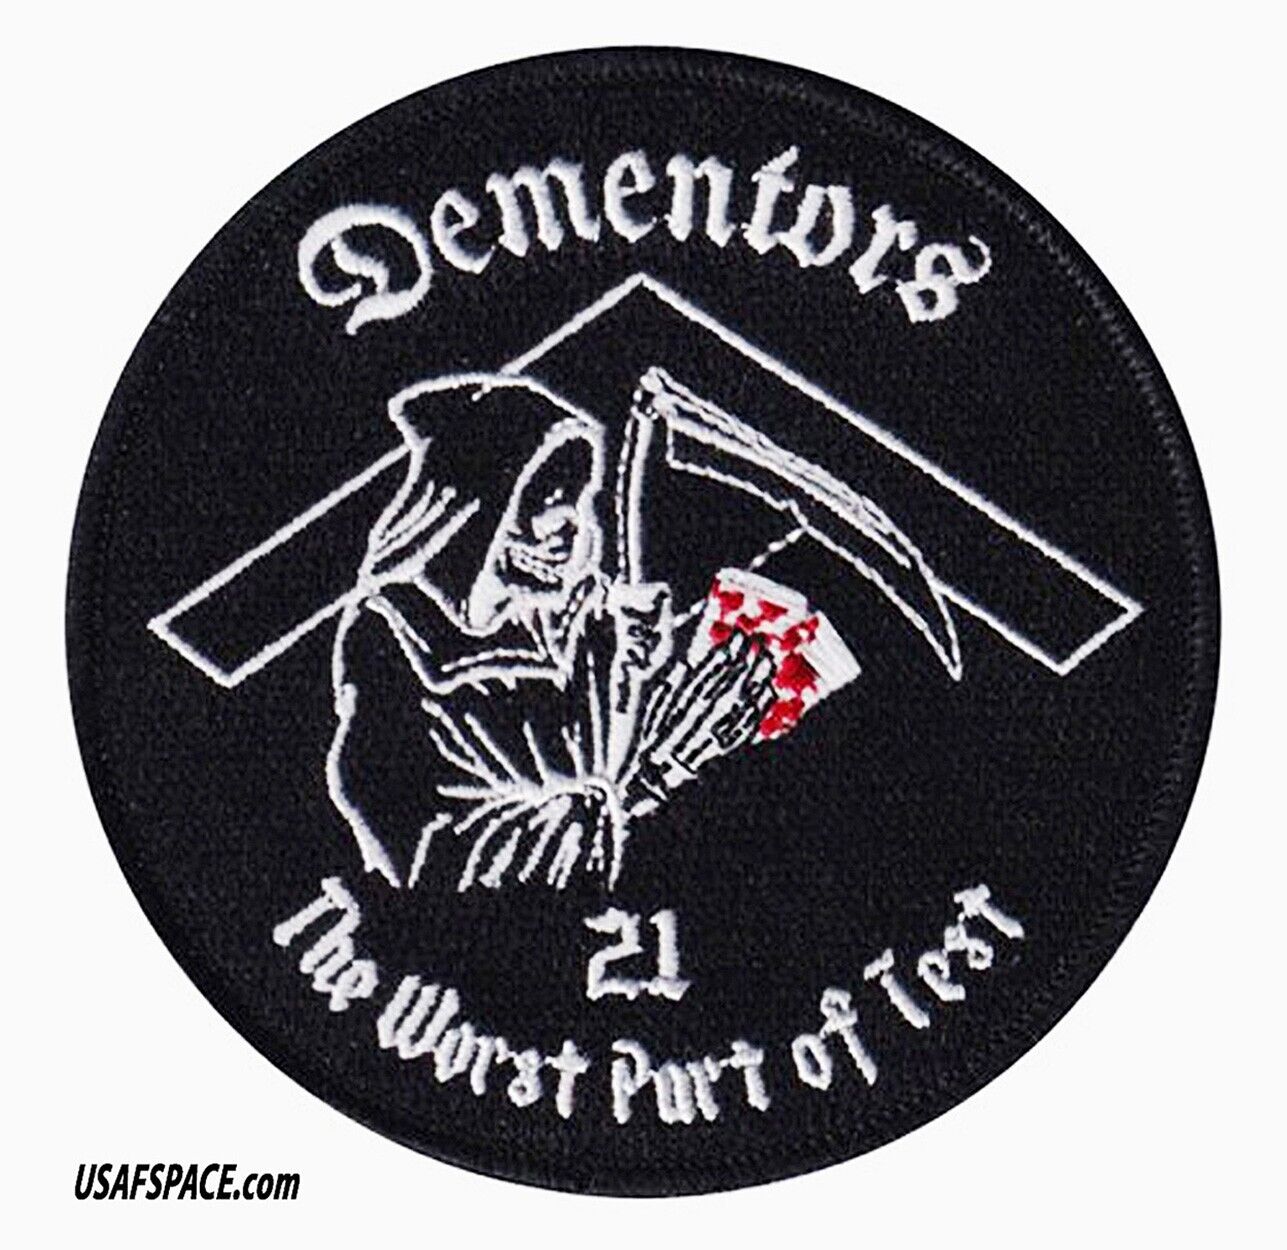 USAF B-21 Raider STEALTH-DEMENTORS-Flight TEST -NGAD-NORTHROP GRUMMAN VEL PATCH